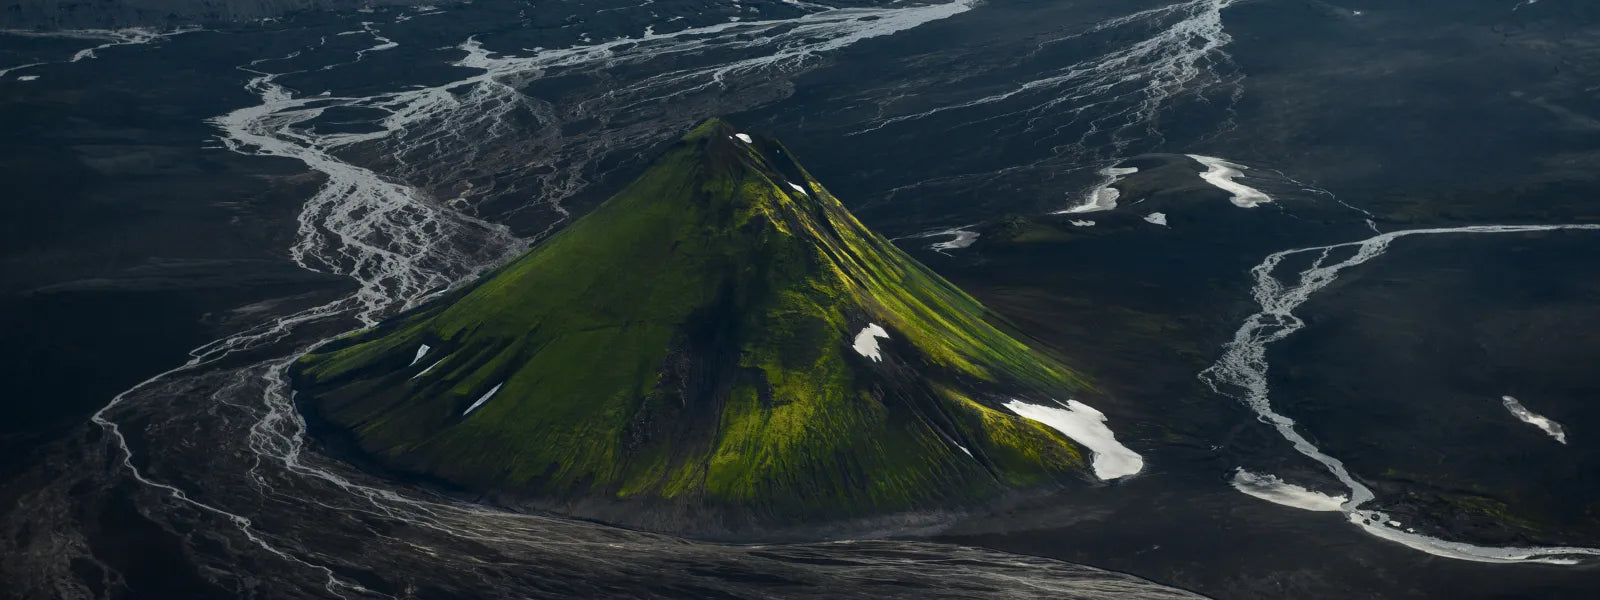 maelifell mountain Iceland